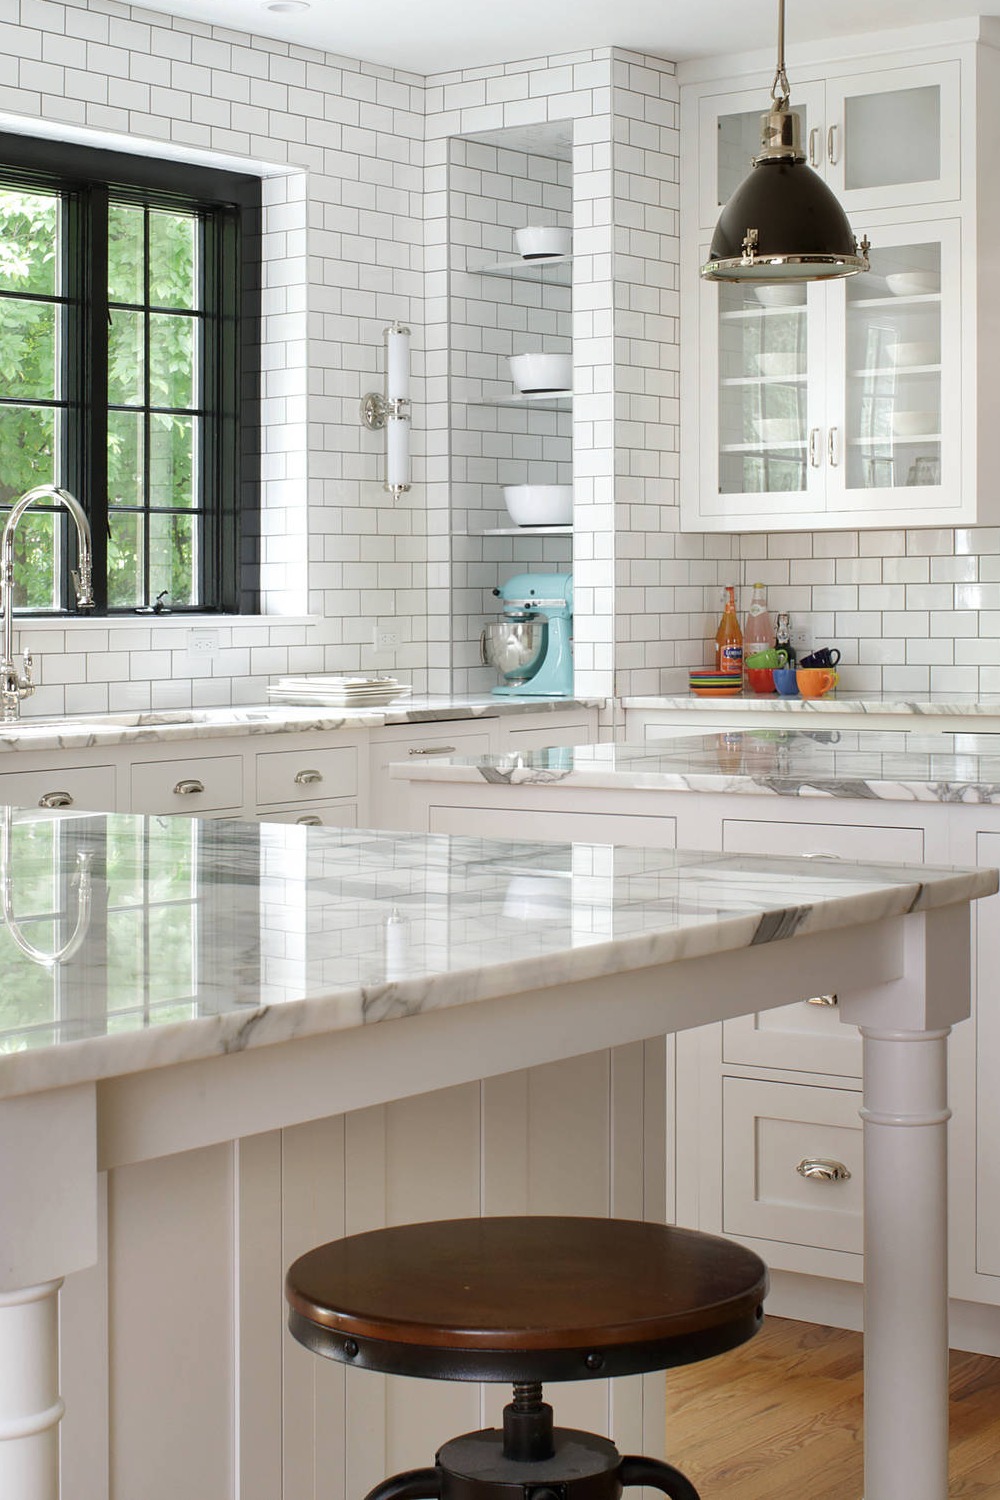 Double Island White Kitchen Cabinets Marble Counters Subway Tile Backsplash Light Wood Flooring Open Concept Pendant Lighting